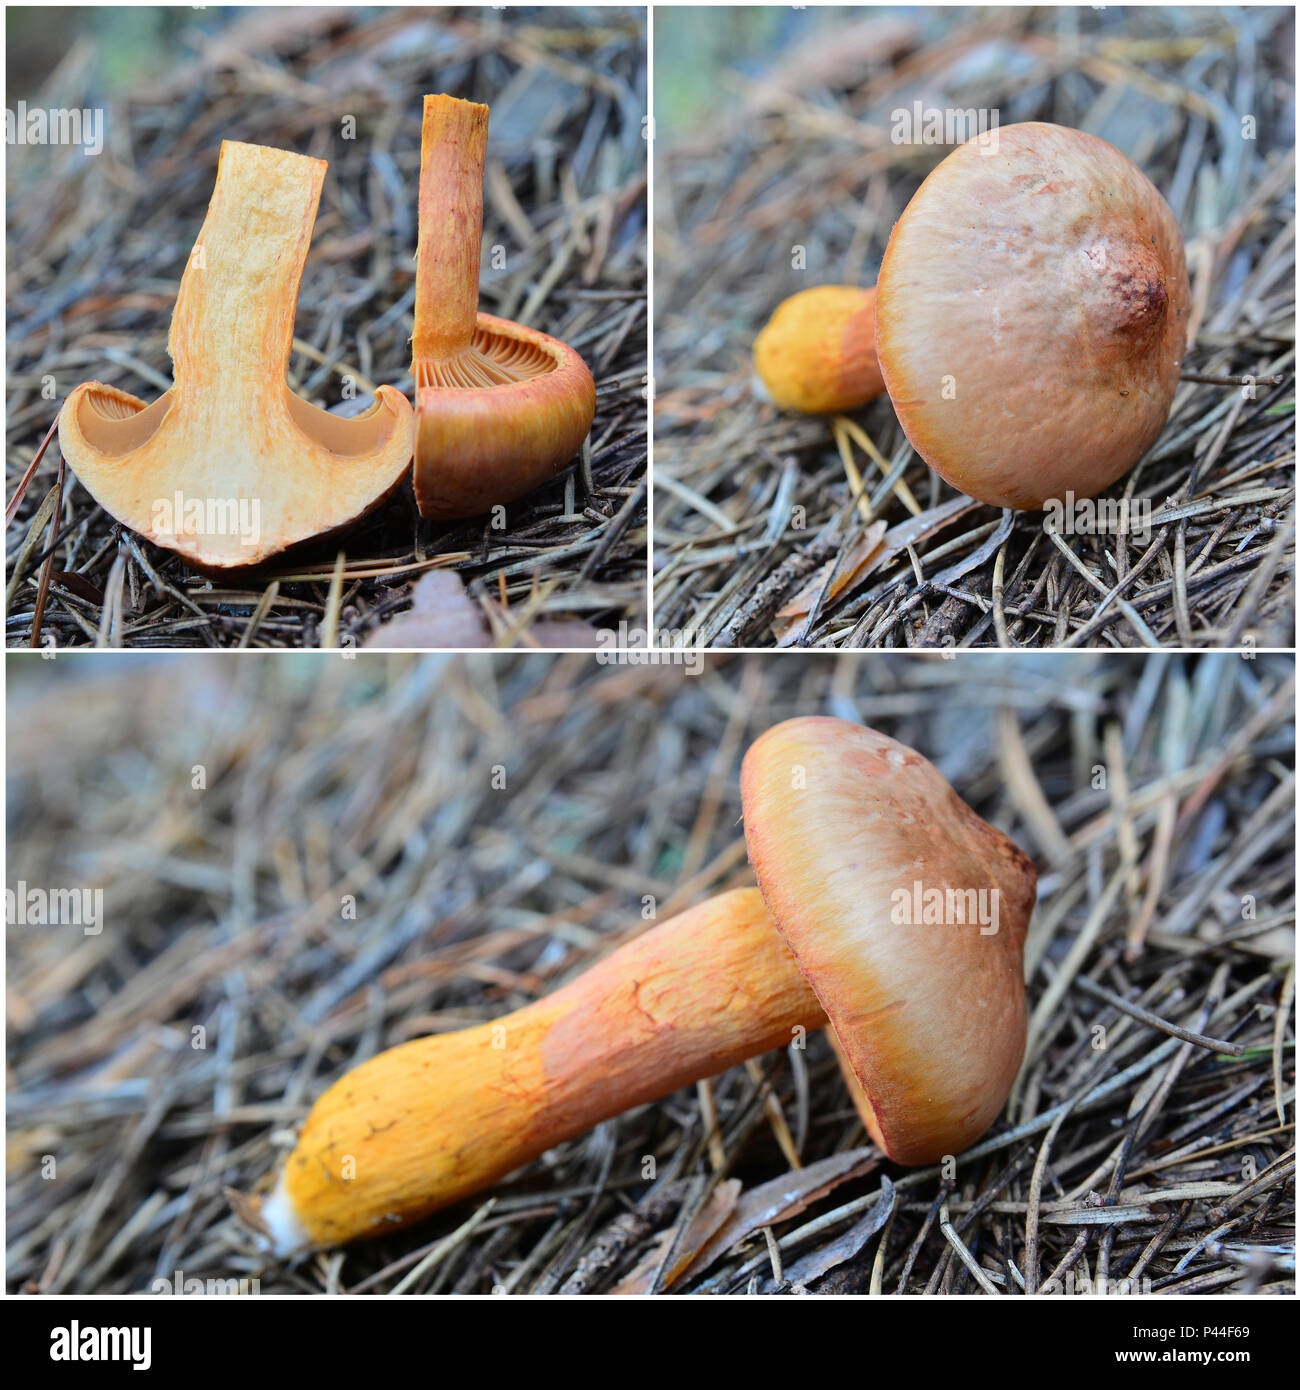 Croogomphus rutilus fungo, collage di diverse inquadrature Foto Stock